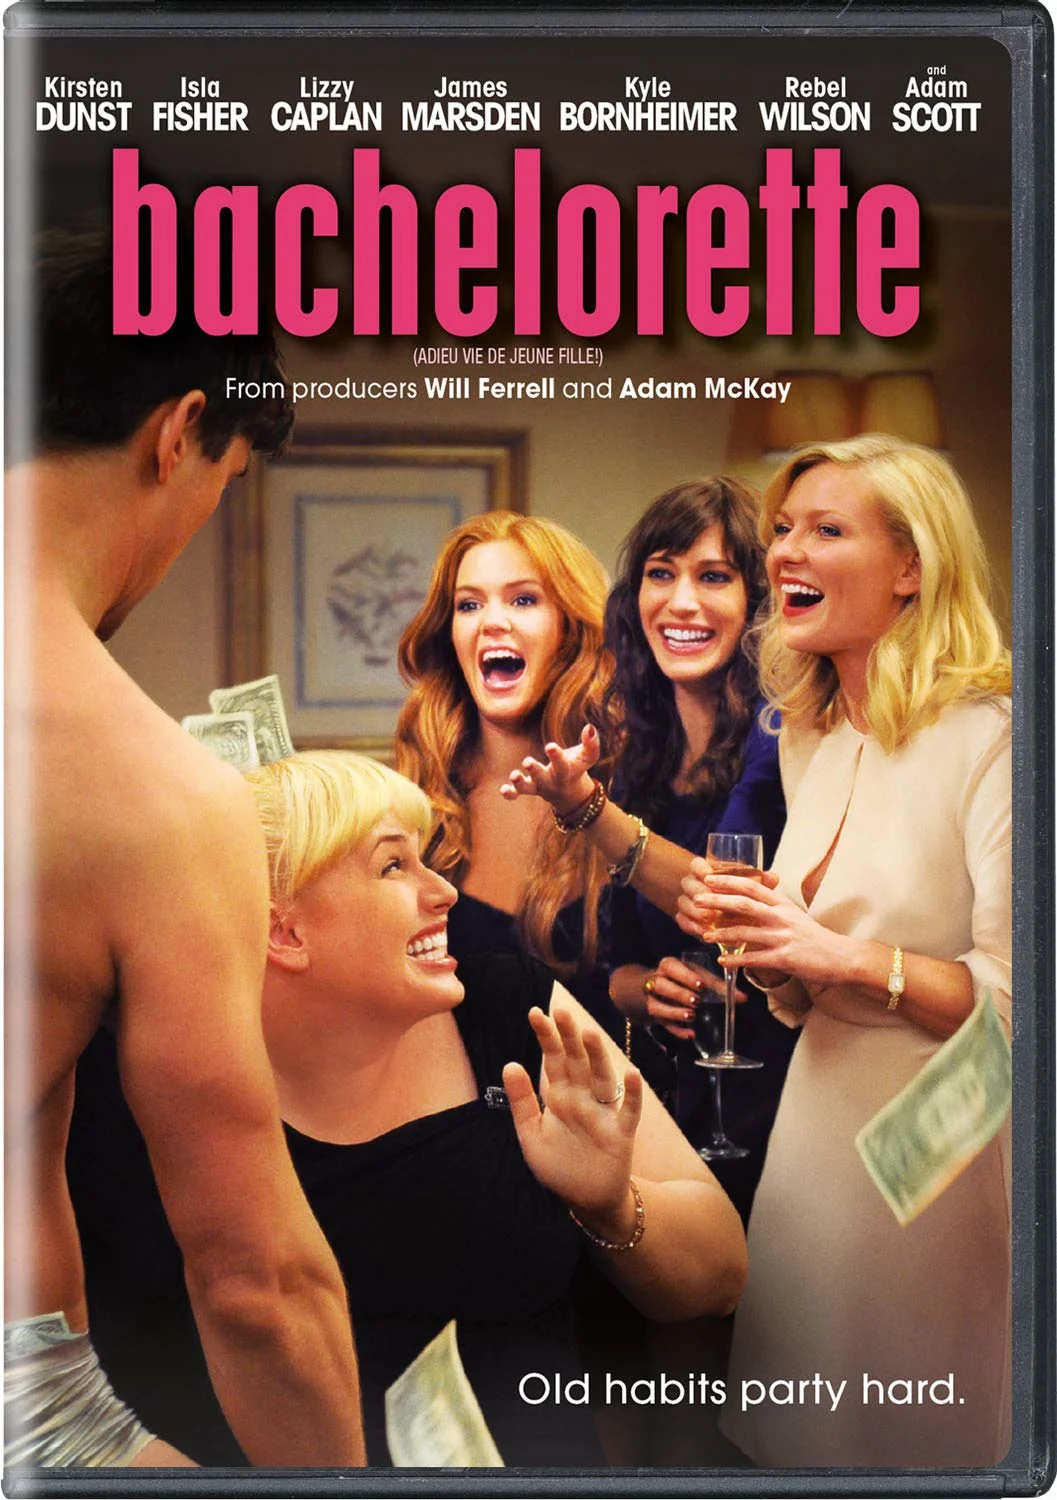 Bachelorette (DVD) on MovieShack